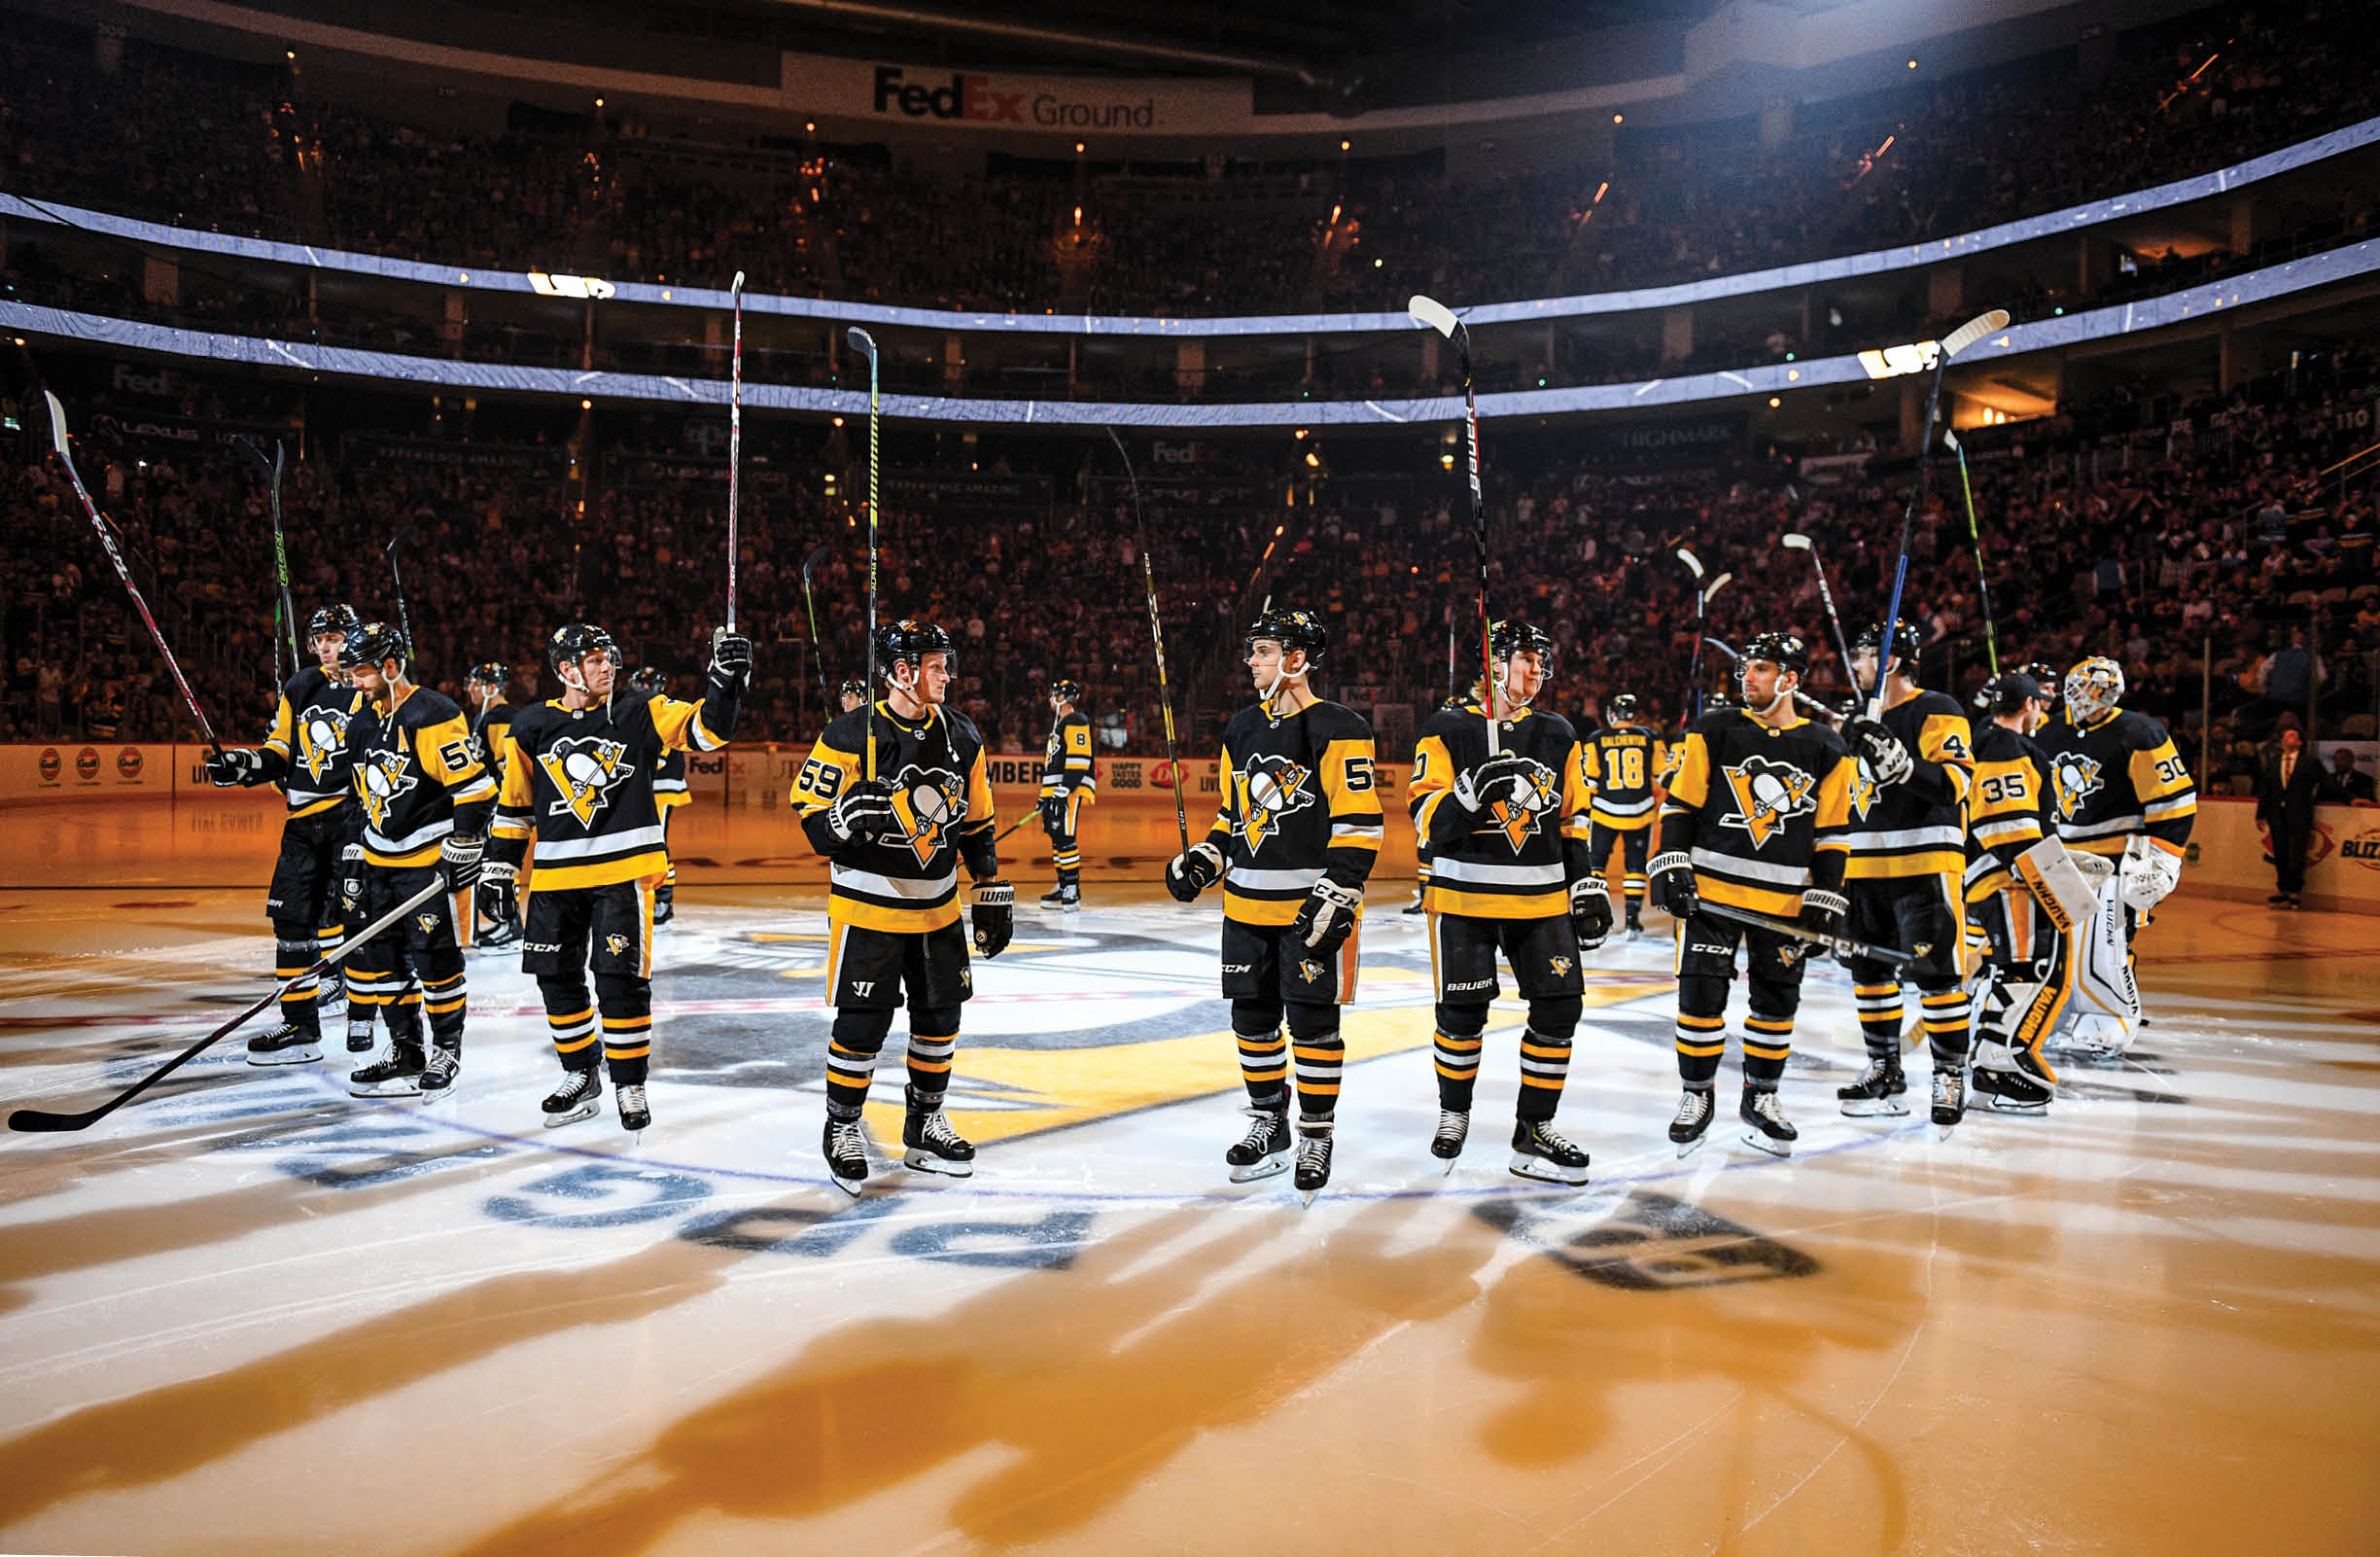 October 3, 2019 - Pittsburgh Penguins vs Buffalo Sabres at PPG Paints Arena  Buffalo won the game 3-1 